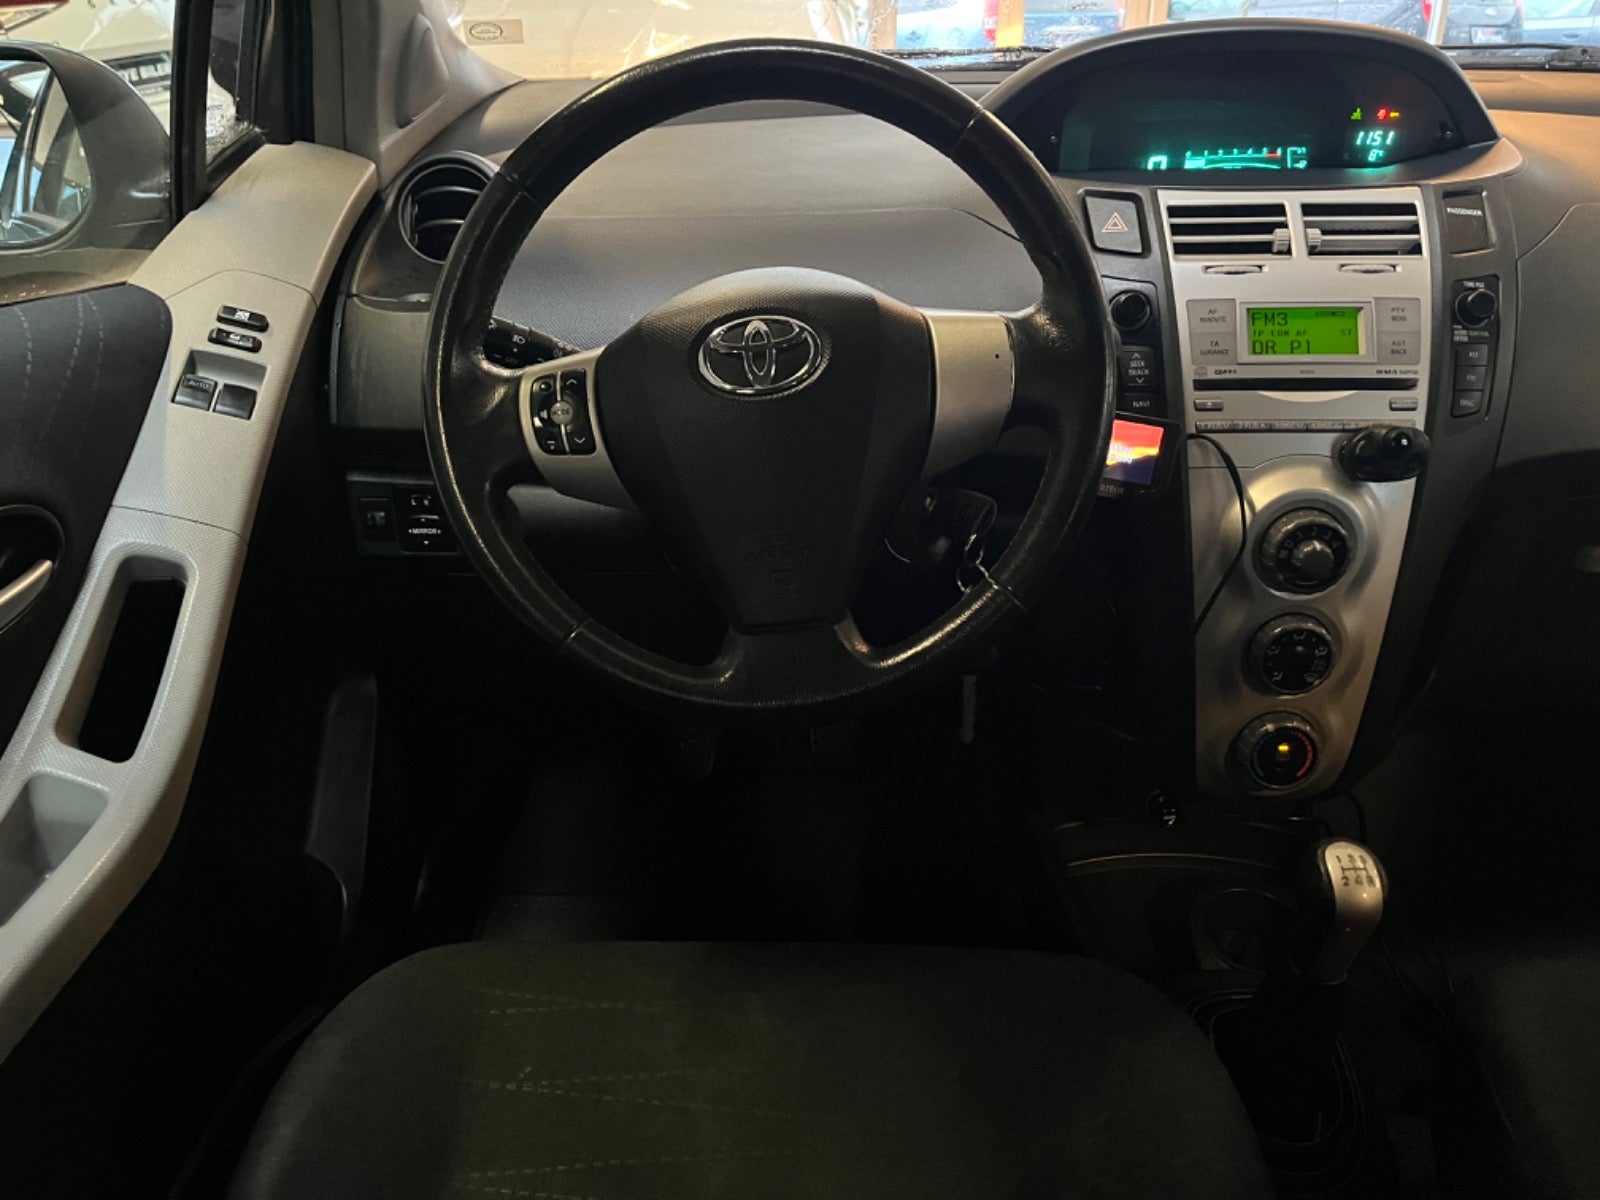 Toyota Yaris 1,4 D-4D Luna Diesel modelår 2007 km 285000